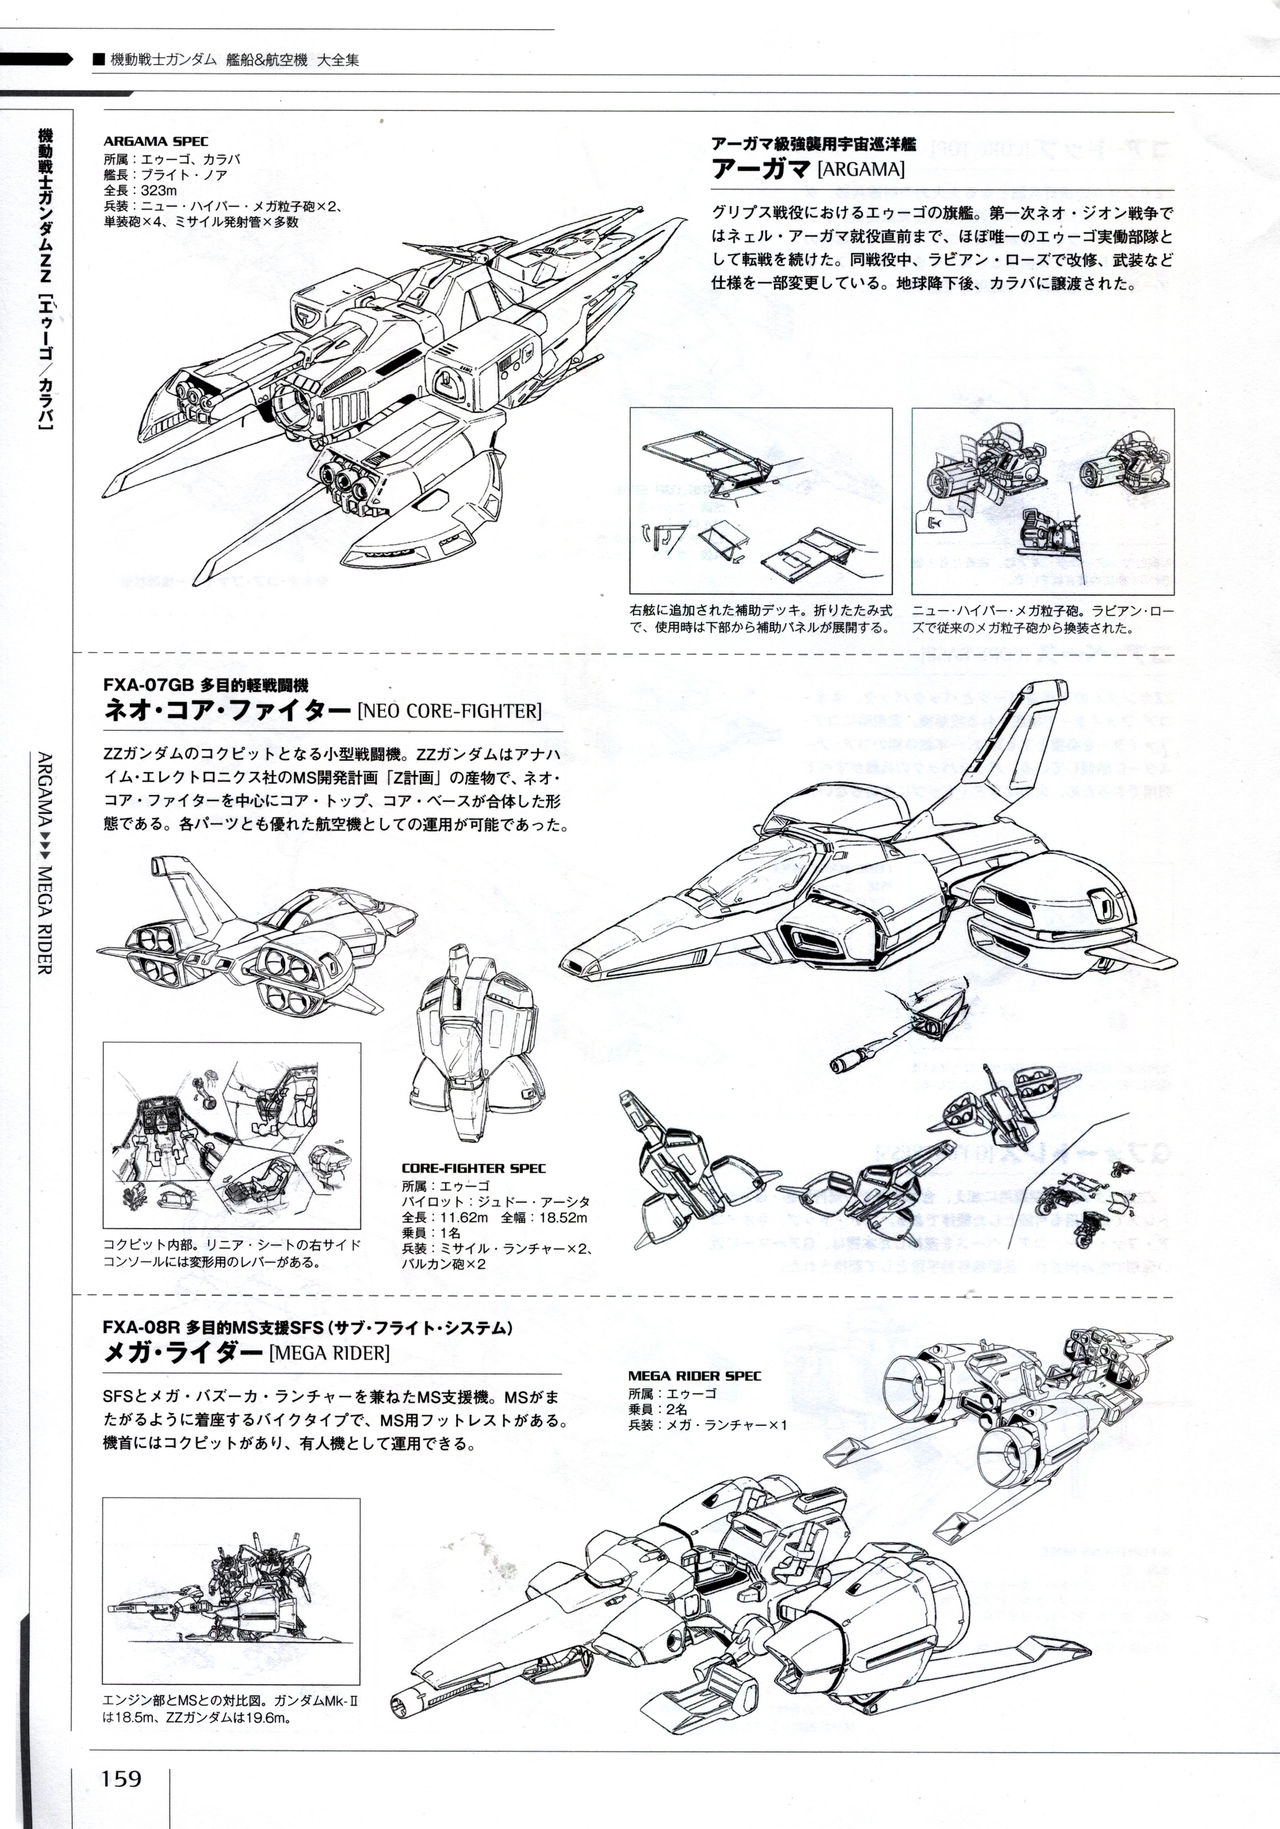 Mobile Suit Gundam - Ship & Aerospace Plane Encyclopedia - Revised Edition 164